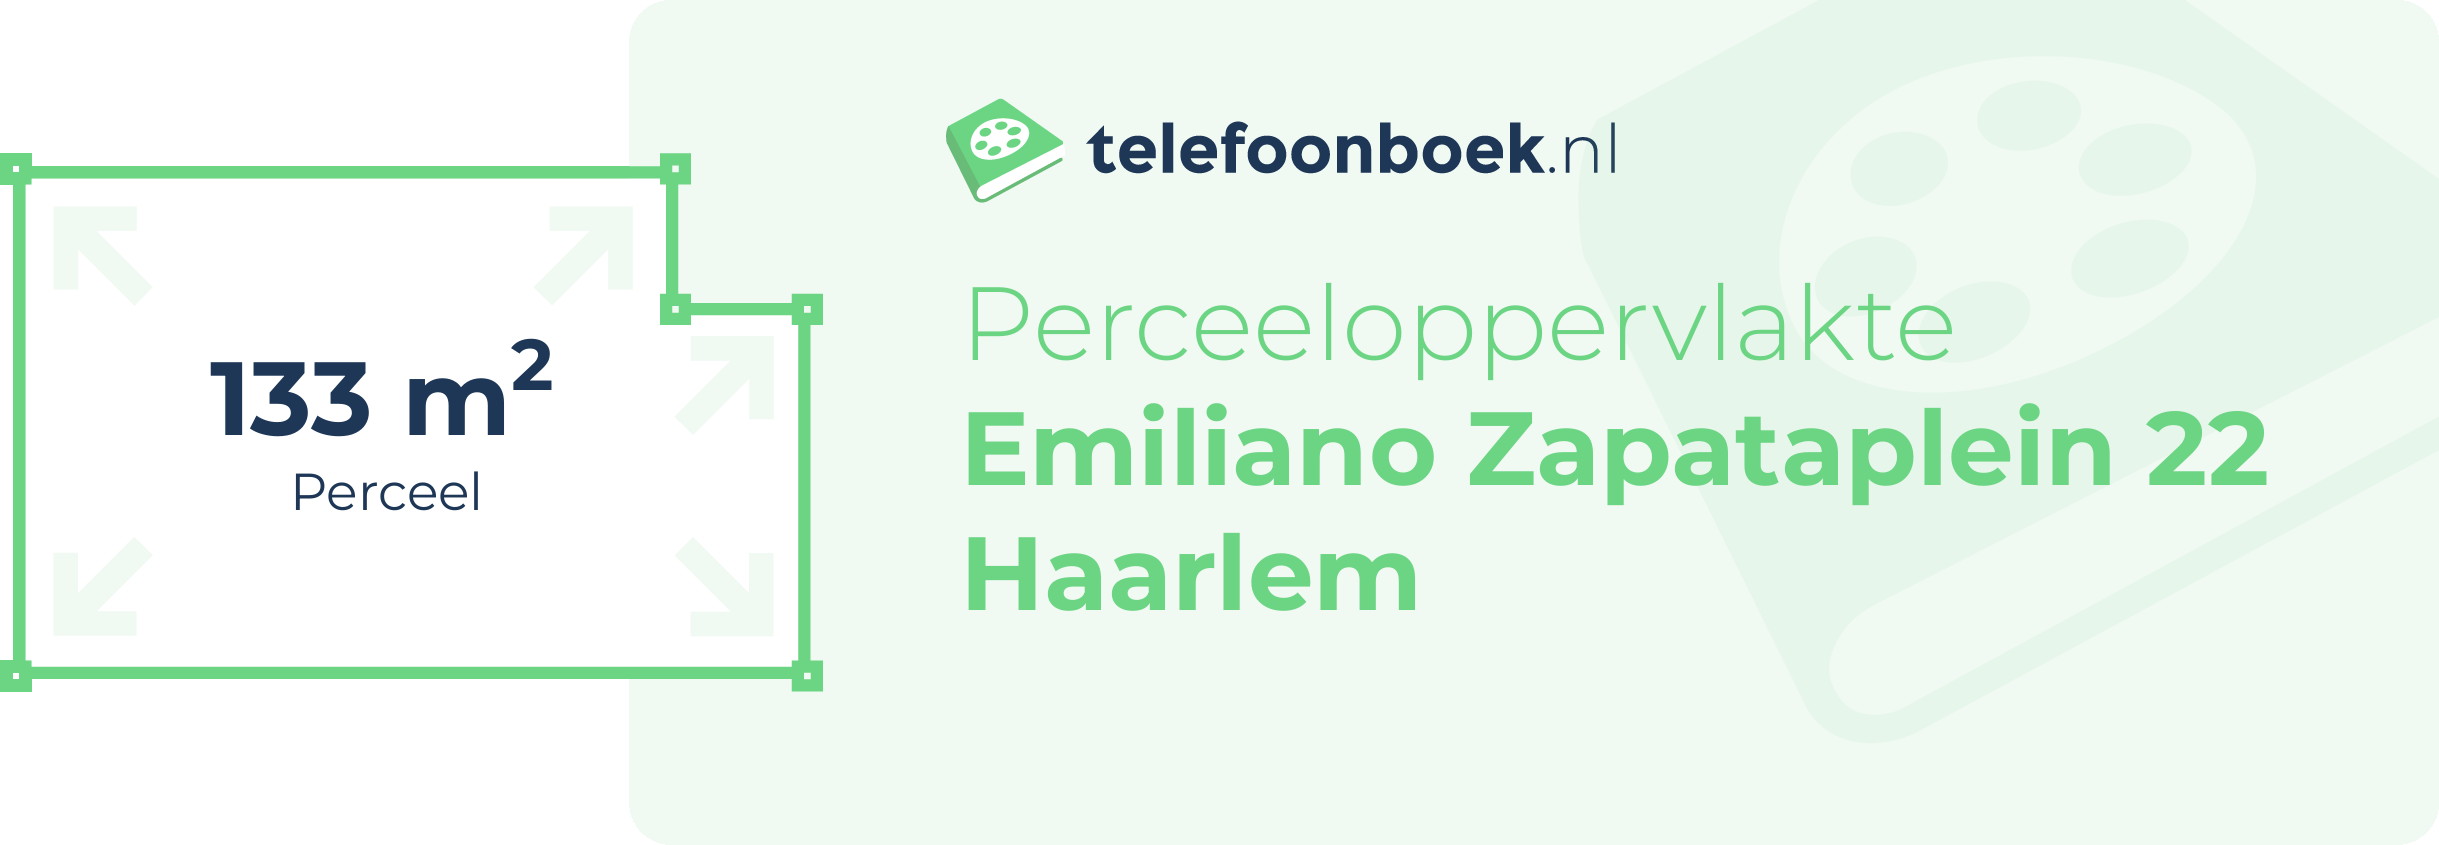 Perceeloppervlakte Emiliano Zapataplein 22 Haarlem